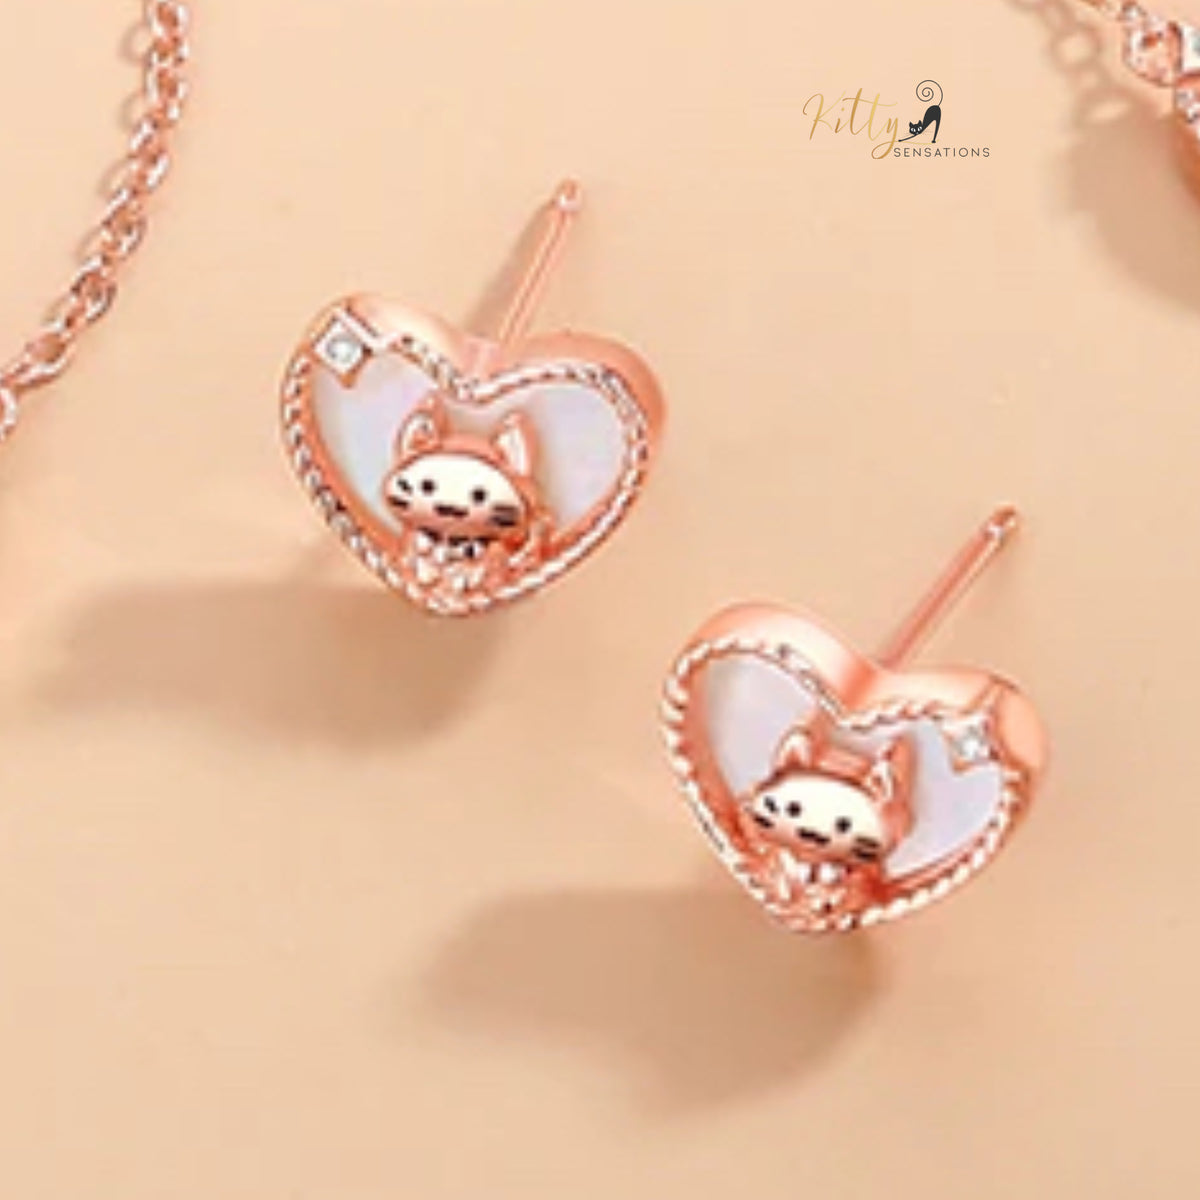 www.KittySensations.com: Raised Kitty in Heart Stud Earrings in Solid 925 Sterling Silver - Rose Gold Plated ($38.61): https://www.kittysensations.com/products/raised-kitty-in-heart-study-earrings-in-solid-925-sterling-silver-rose-gold-plated